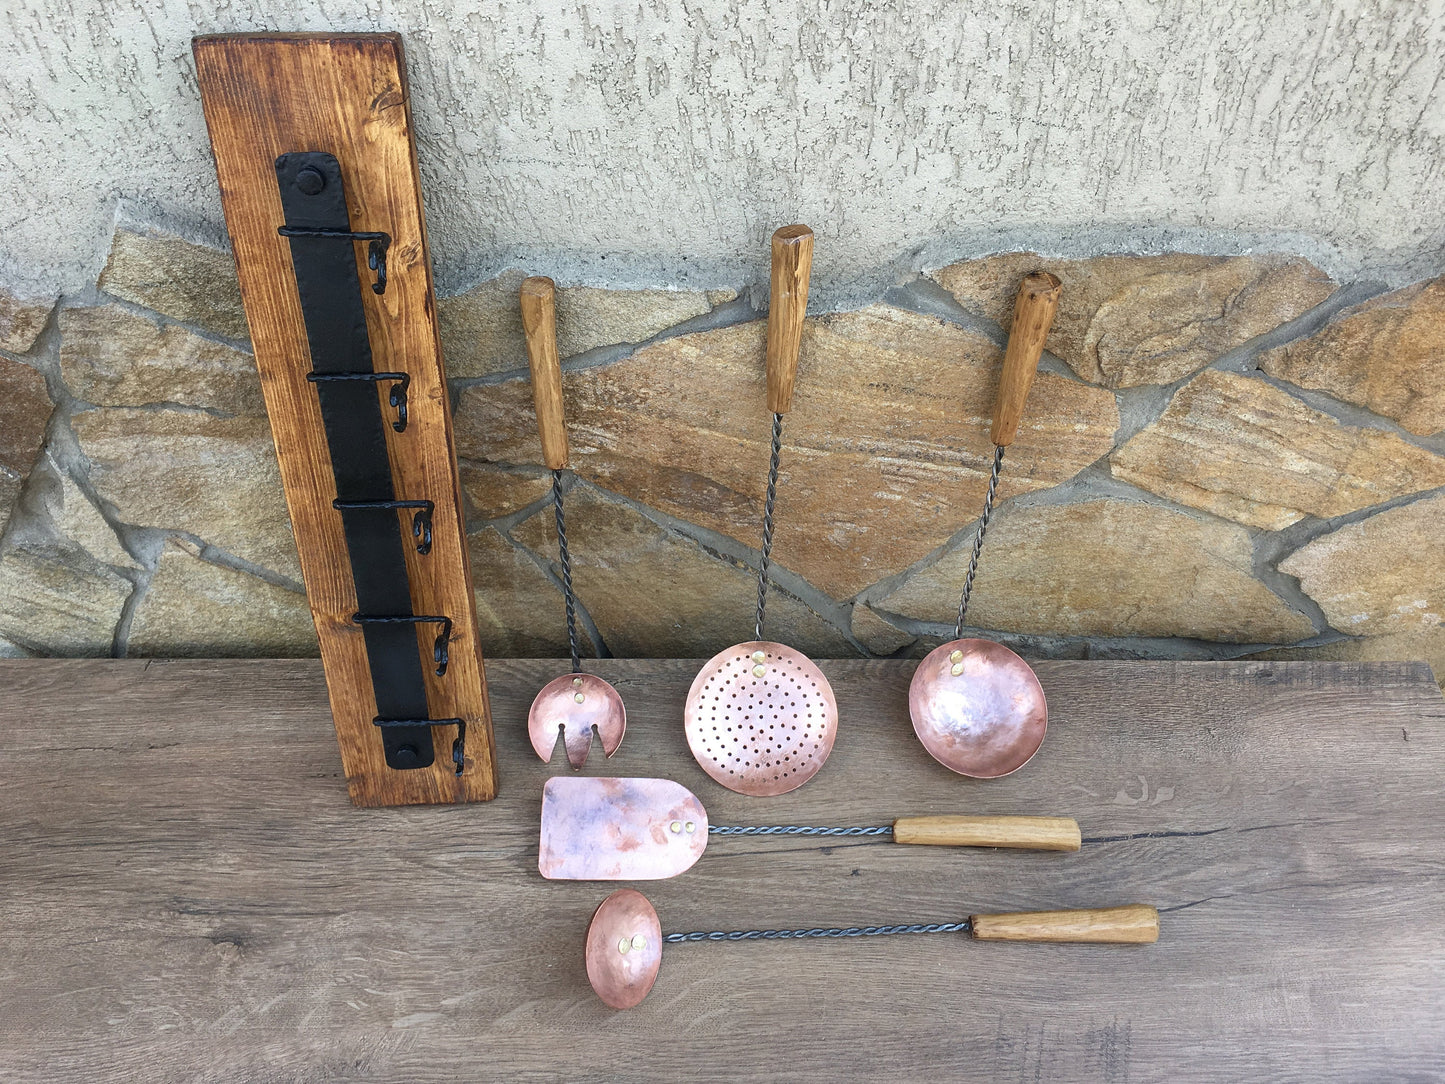 Copper cooking utensils, cooking utensils, medieval cutlery, ladle, ladle water dipper, spatula, medieval gift, strainer,vintage utensil set